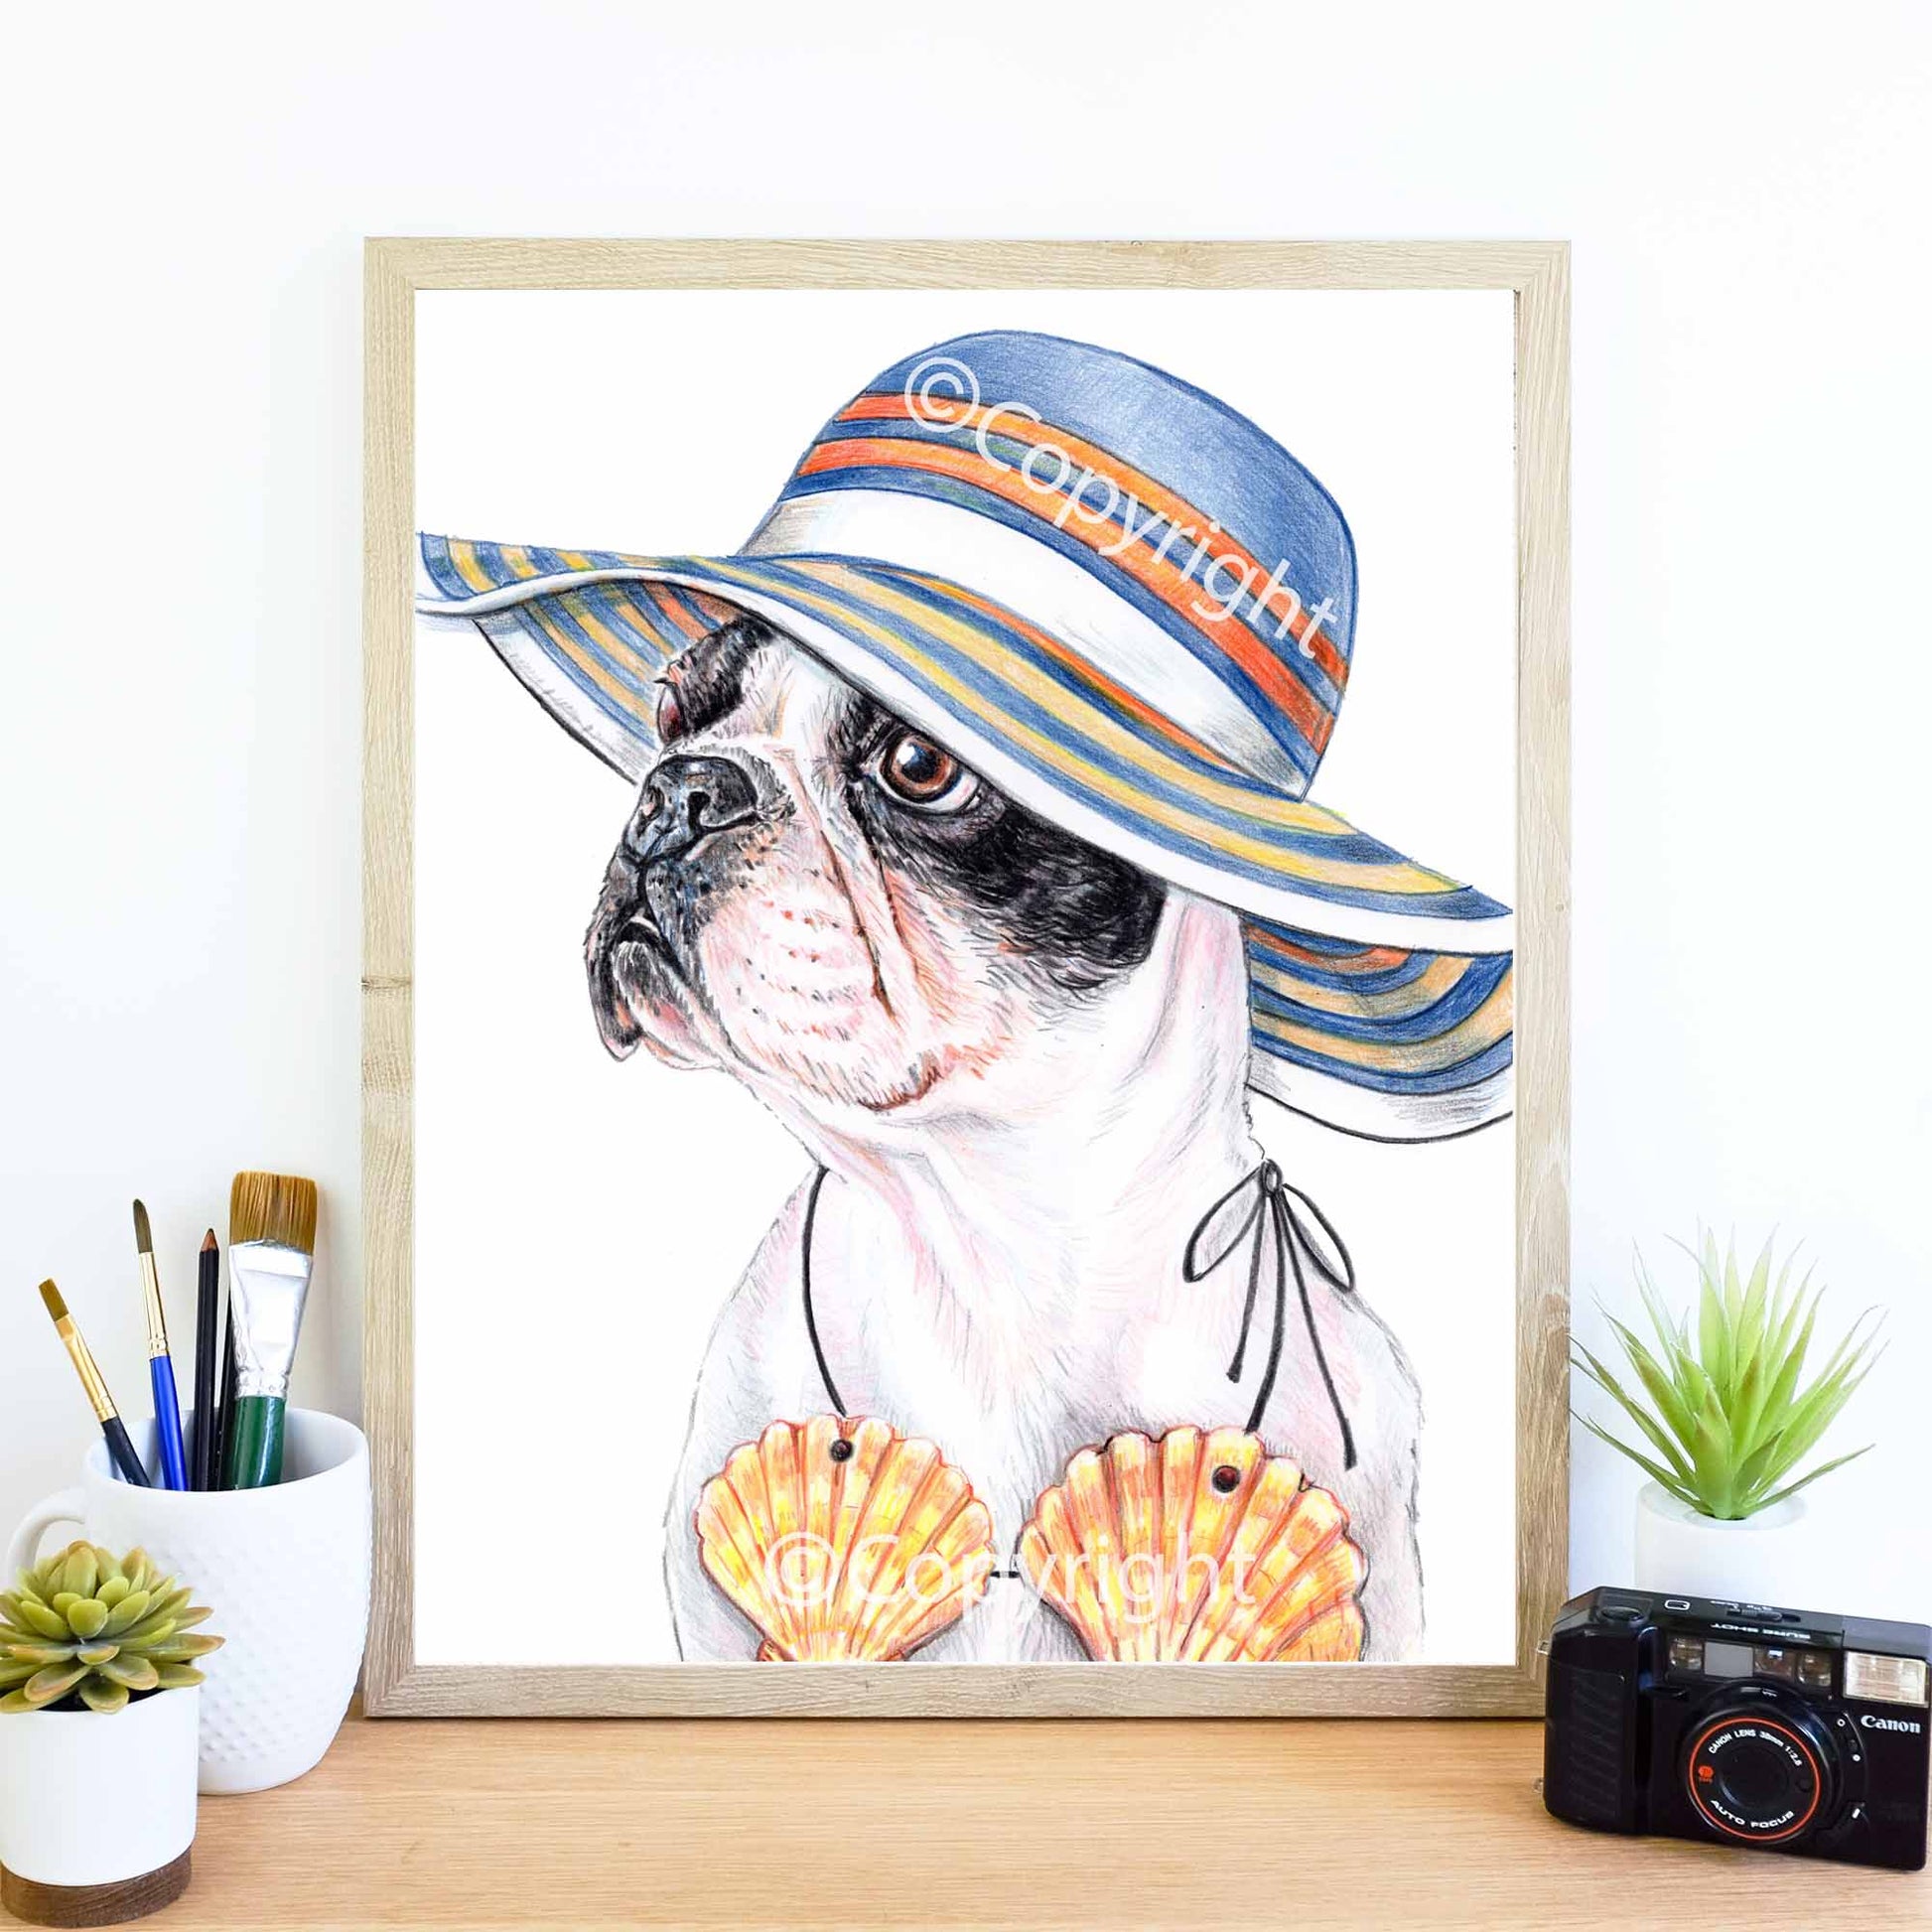 Crayon drawing of a boston terrier dog wearing a sun hat and a sea shell bikini. Art by Deidre Wicks